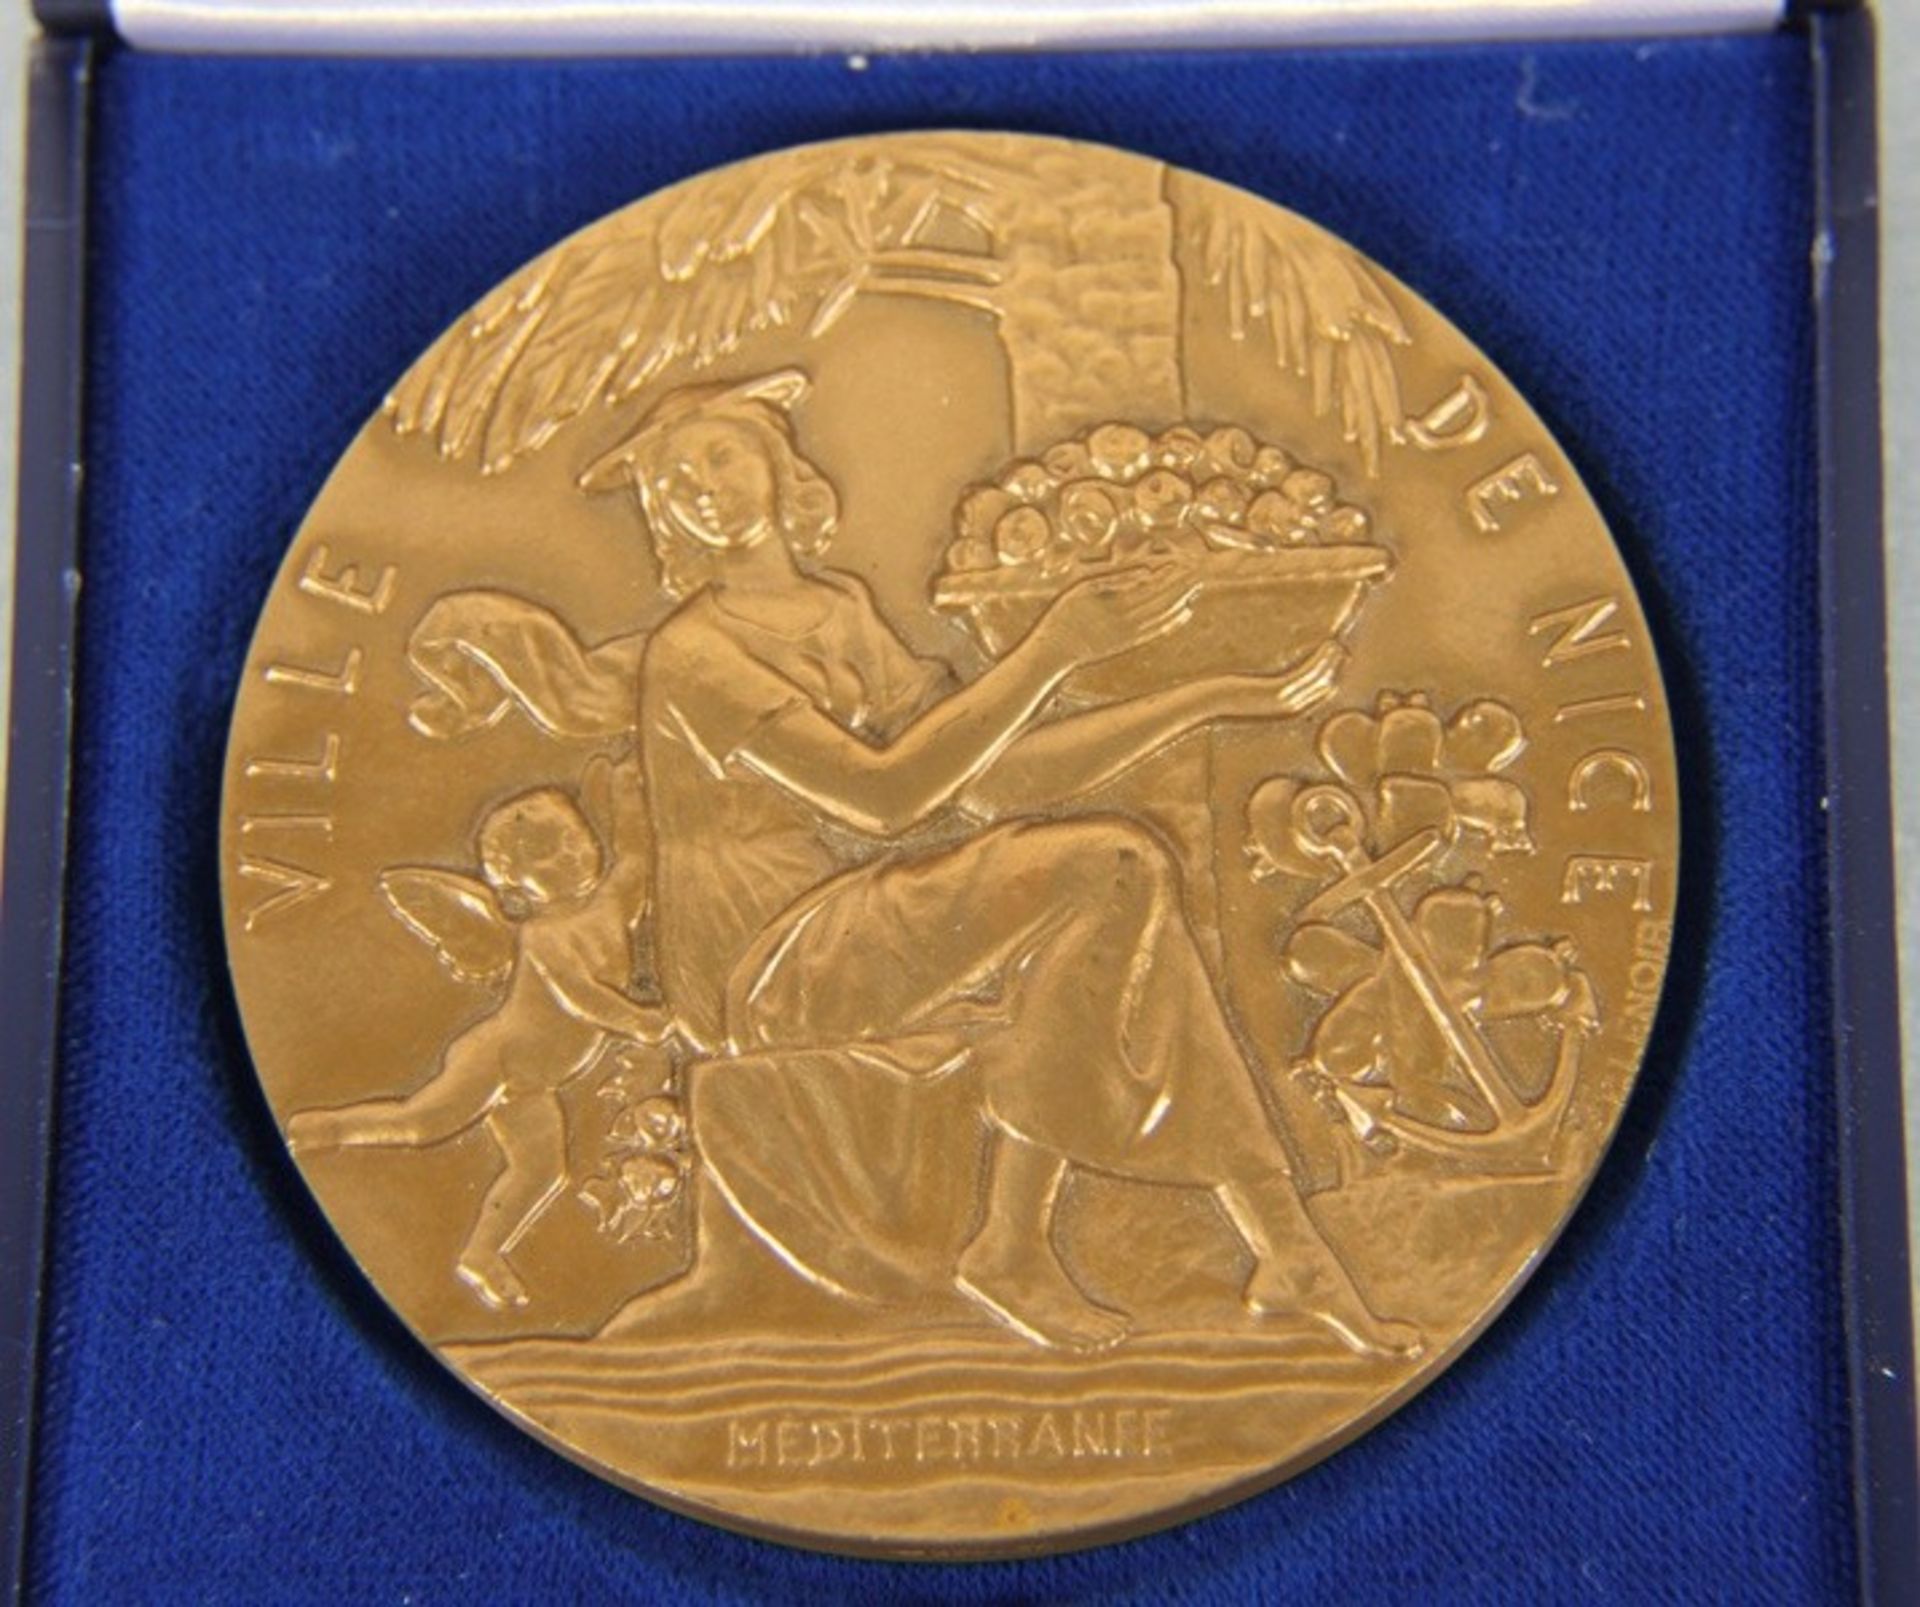 Lenoir-Medaille Bronze, schwere Medaille, Entwurf P. Lenoir, Ville de Nice Mediterranee, Front mit